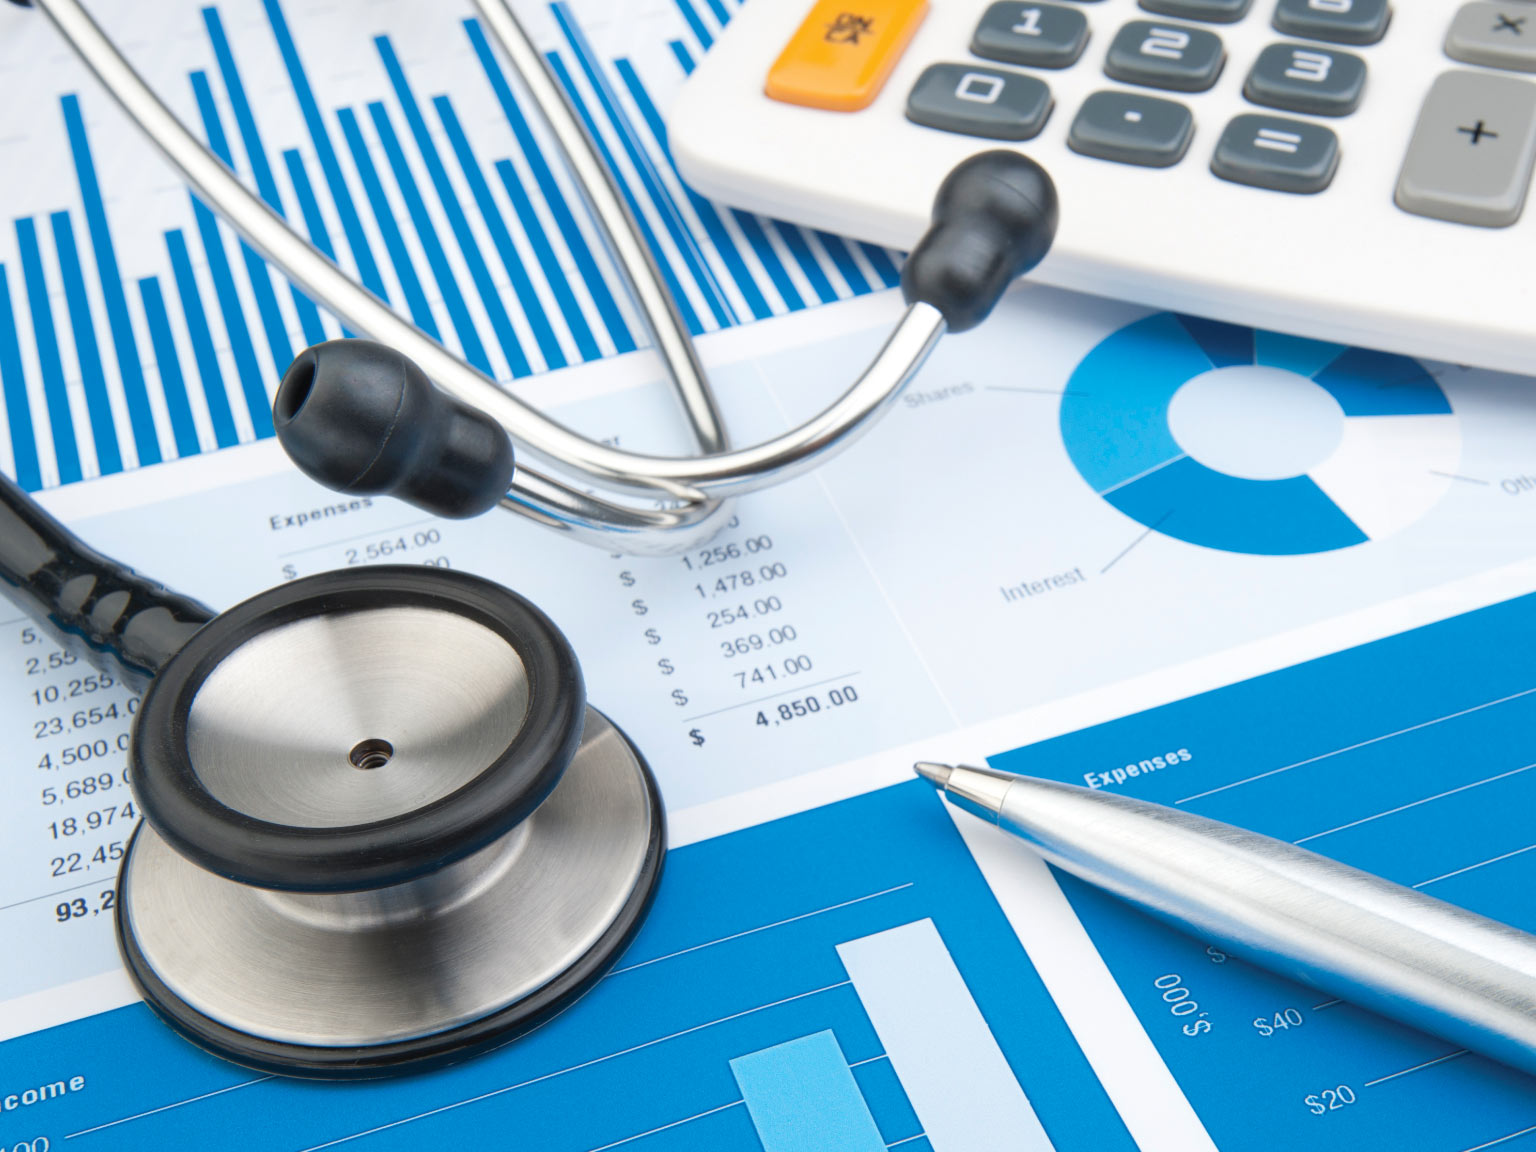 Public Healthcare Insurance Fraud Mitigation: Big Data Analytics